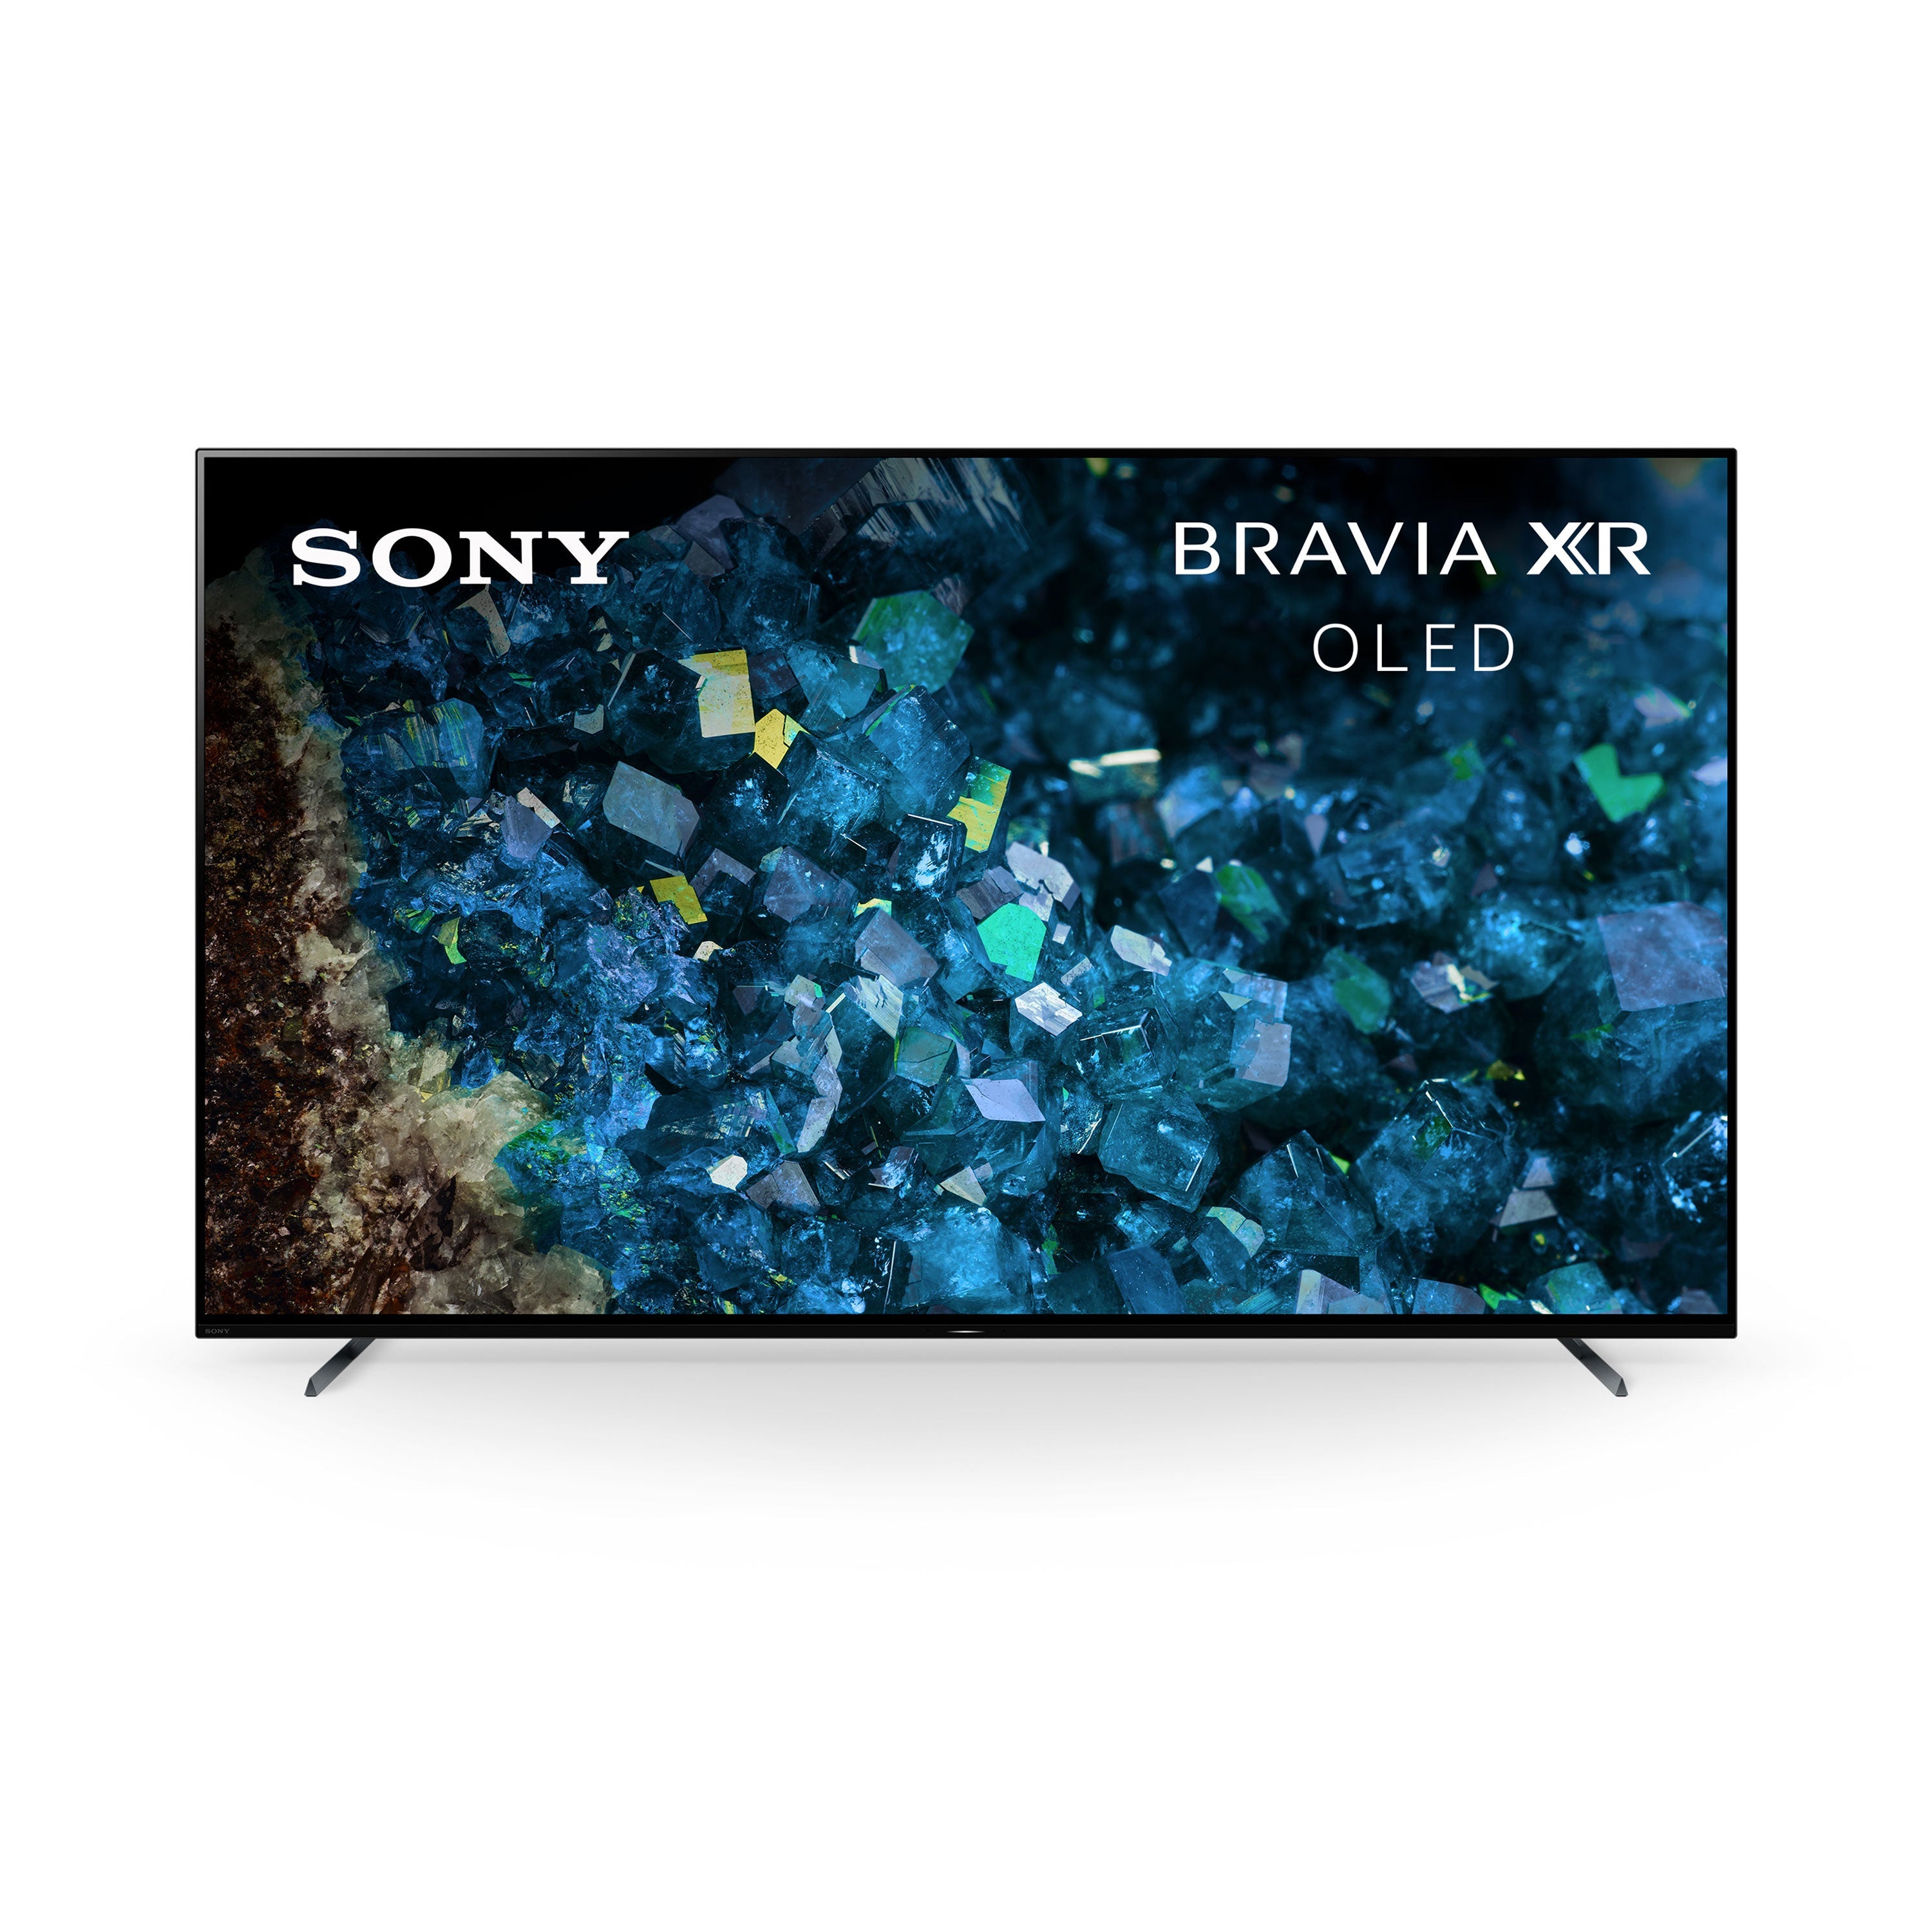 A80L BRAVIA XR | OLED | 4K HDR TV with Playstation 5 Bundle